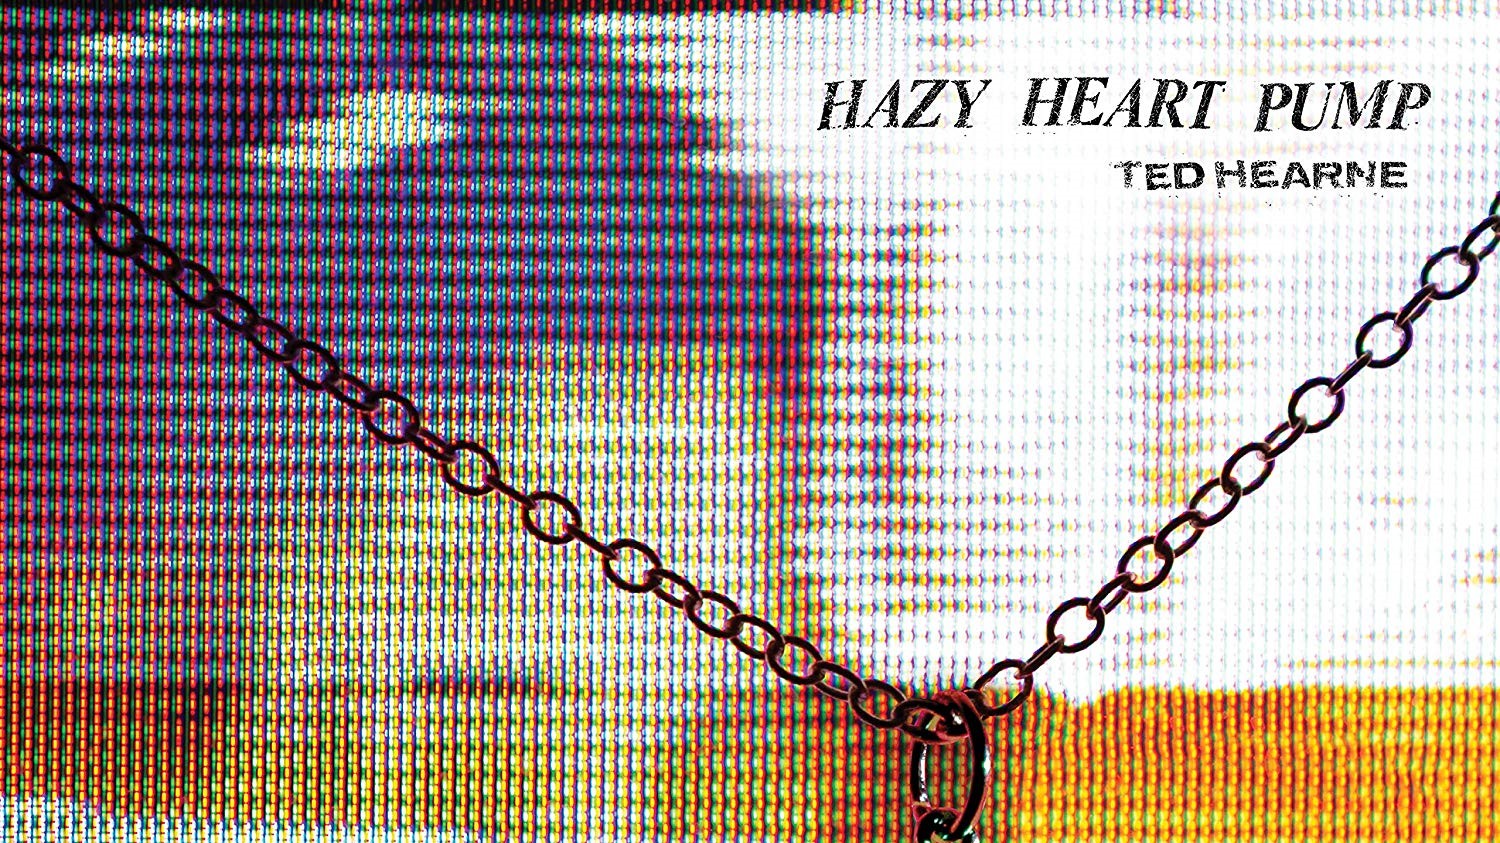 Ted Hearne - Hazy heart pump